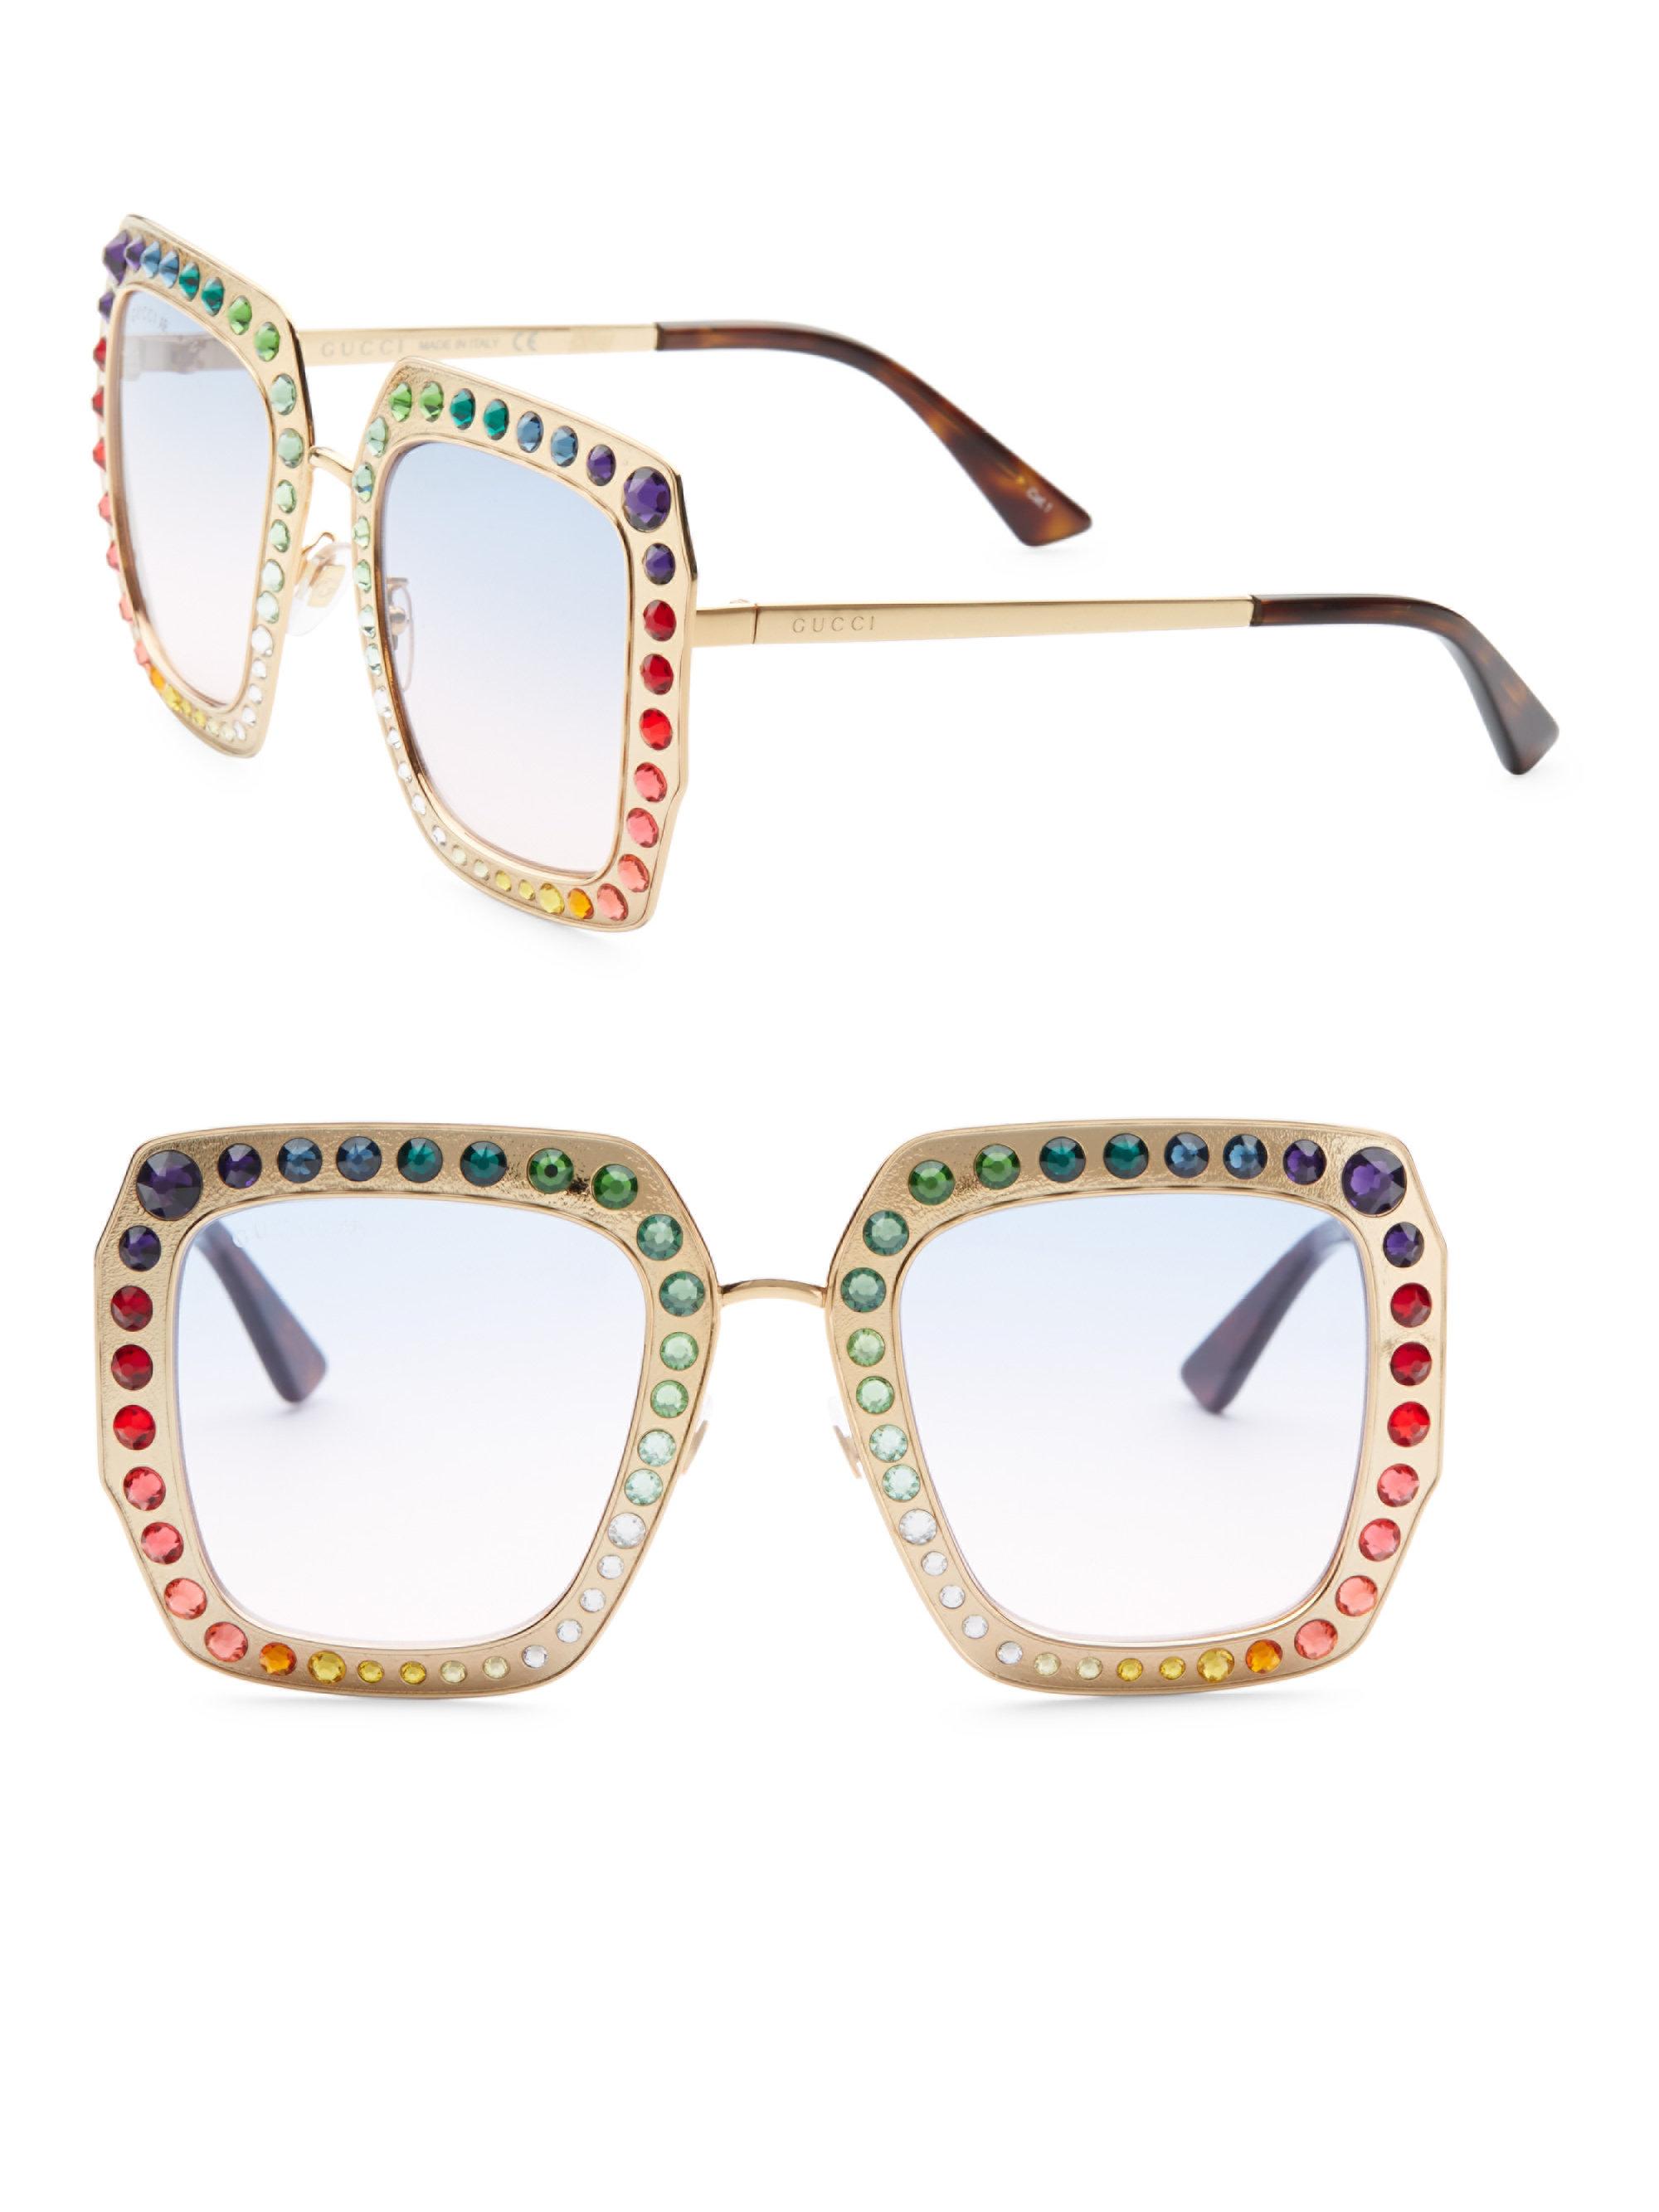 rainbow gucci glasses, OFF 73%,www 